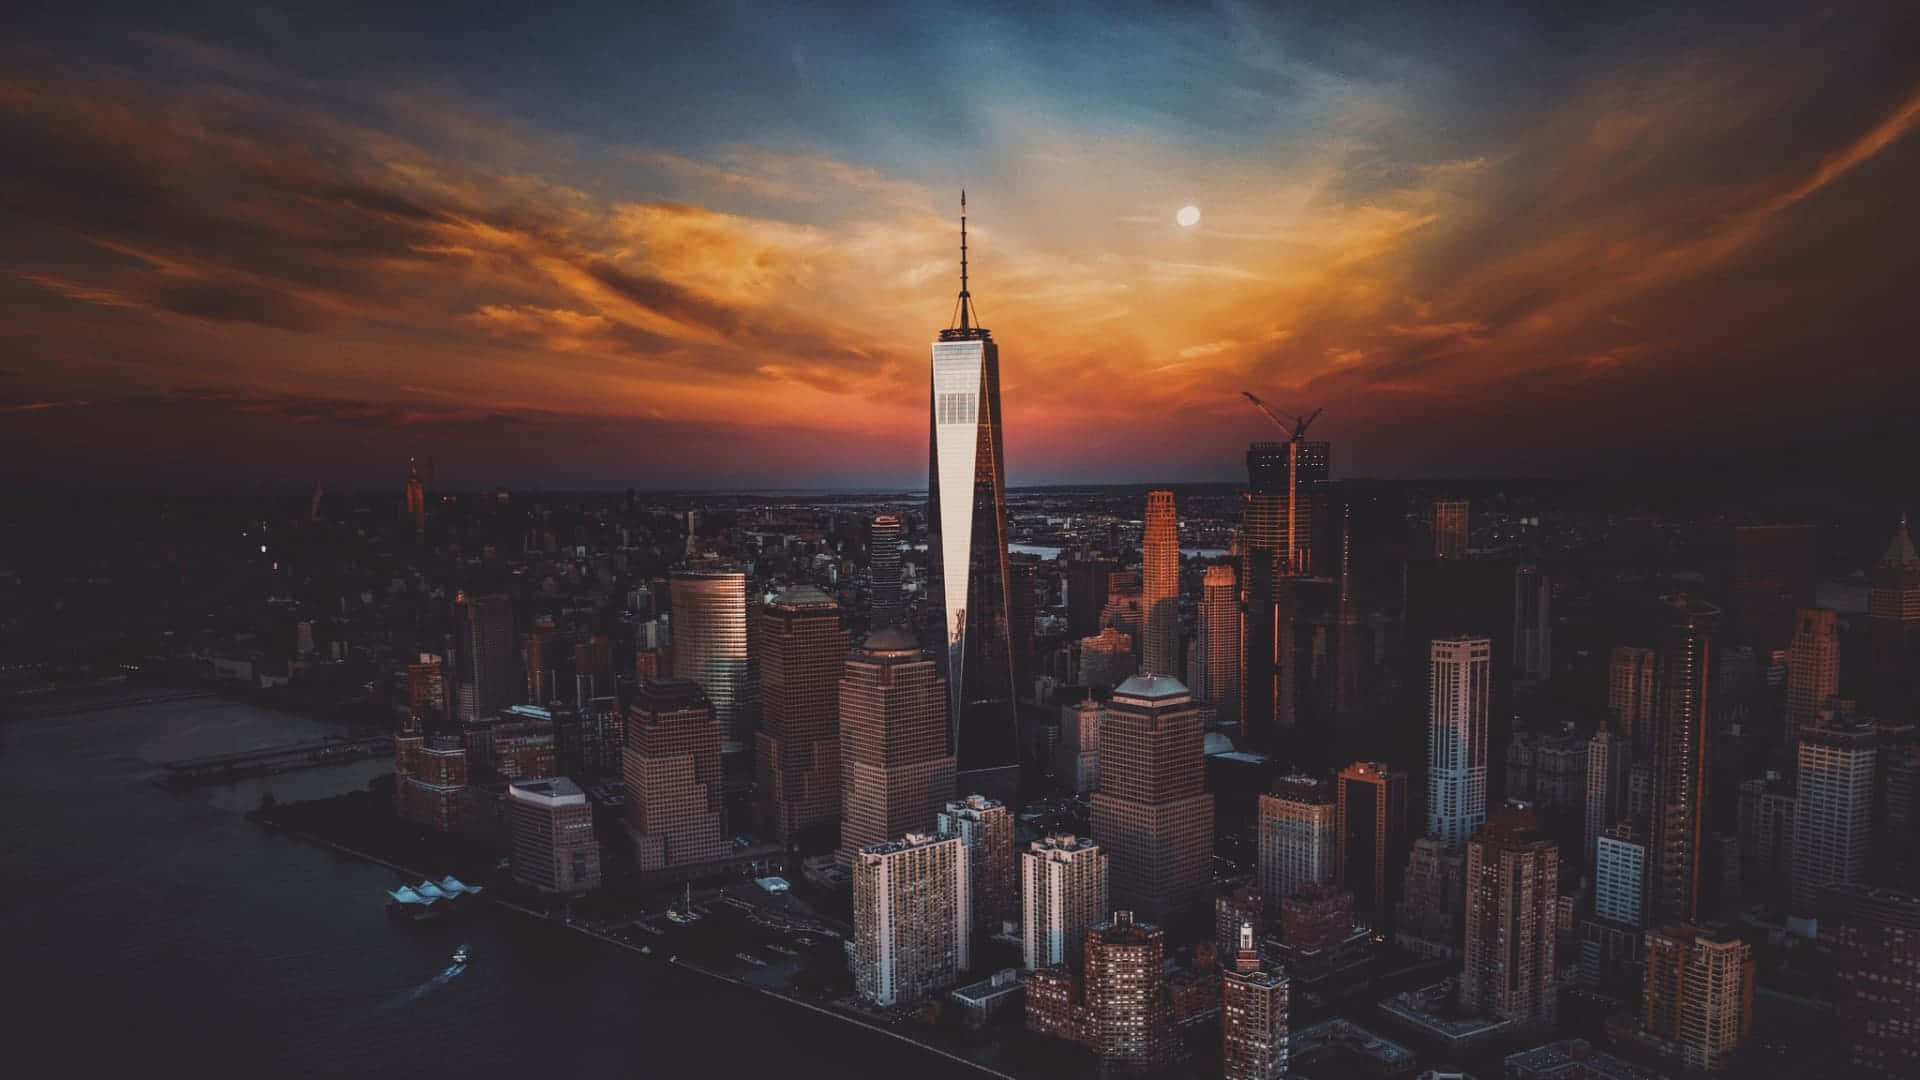 The iconic skyline of Manhattan, New York